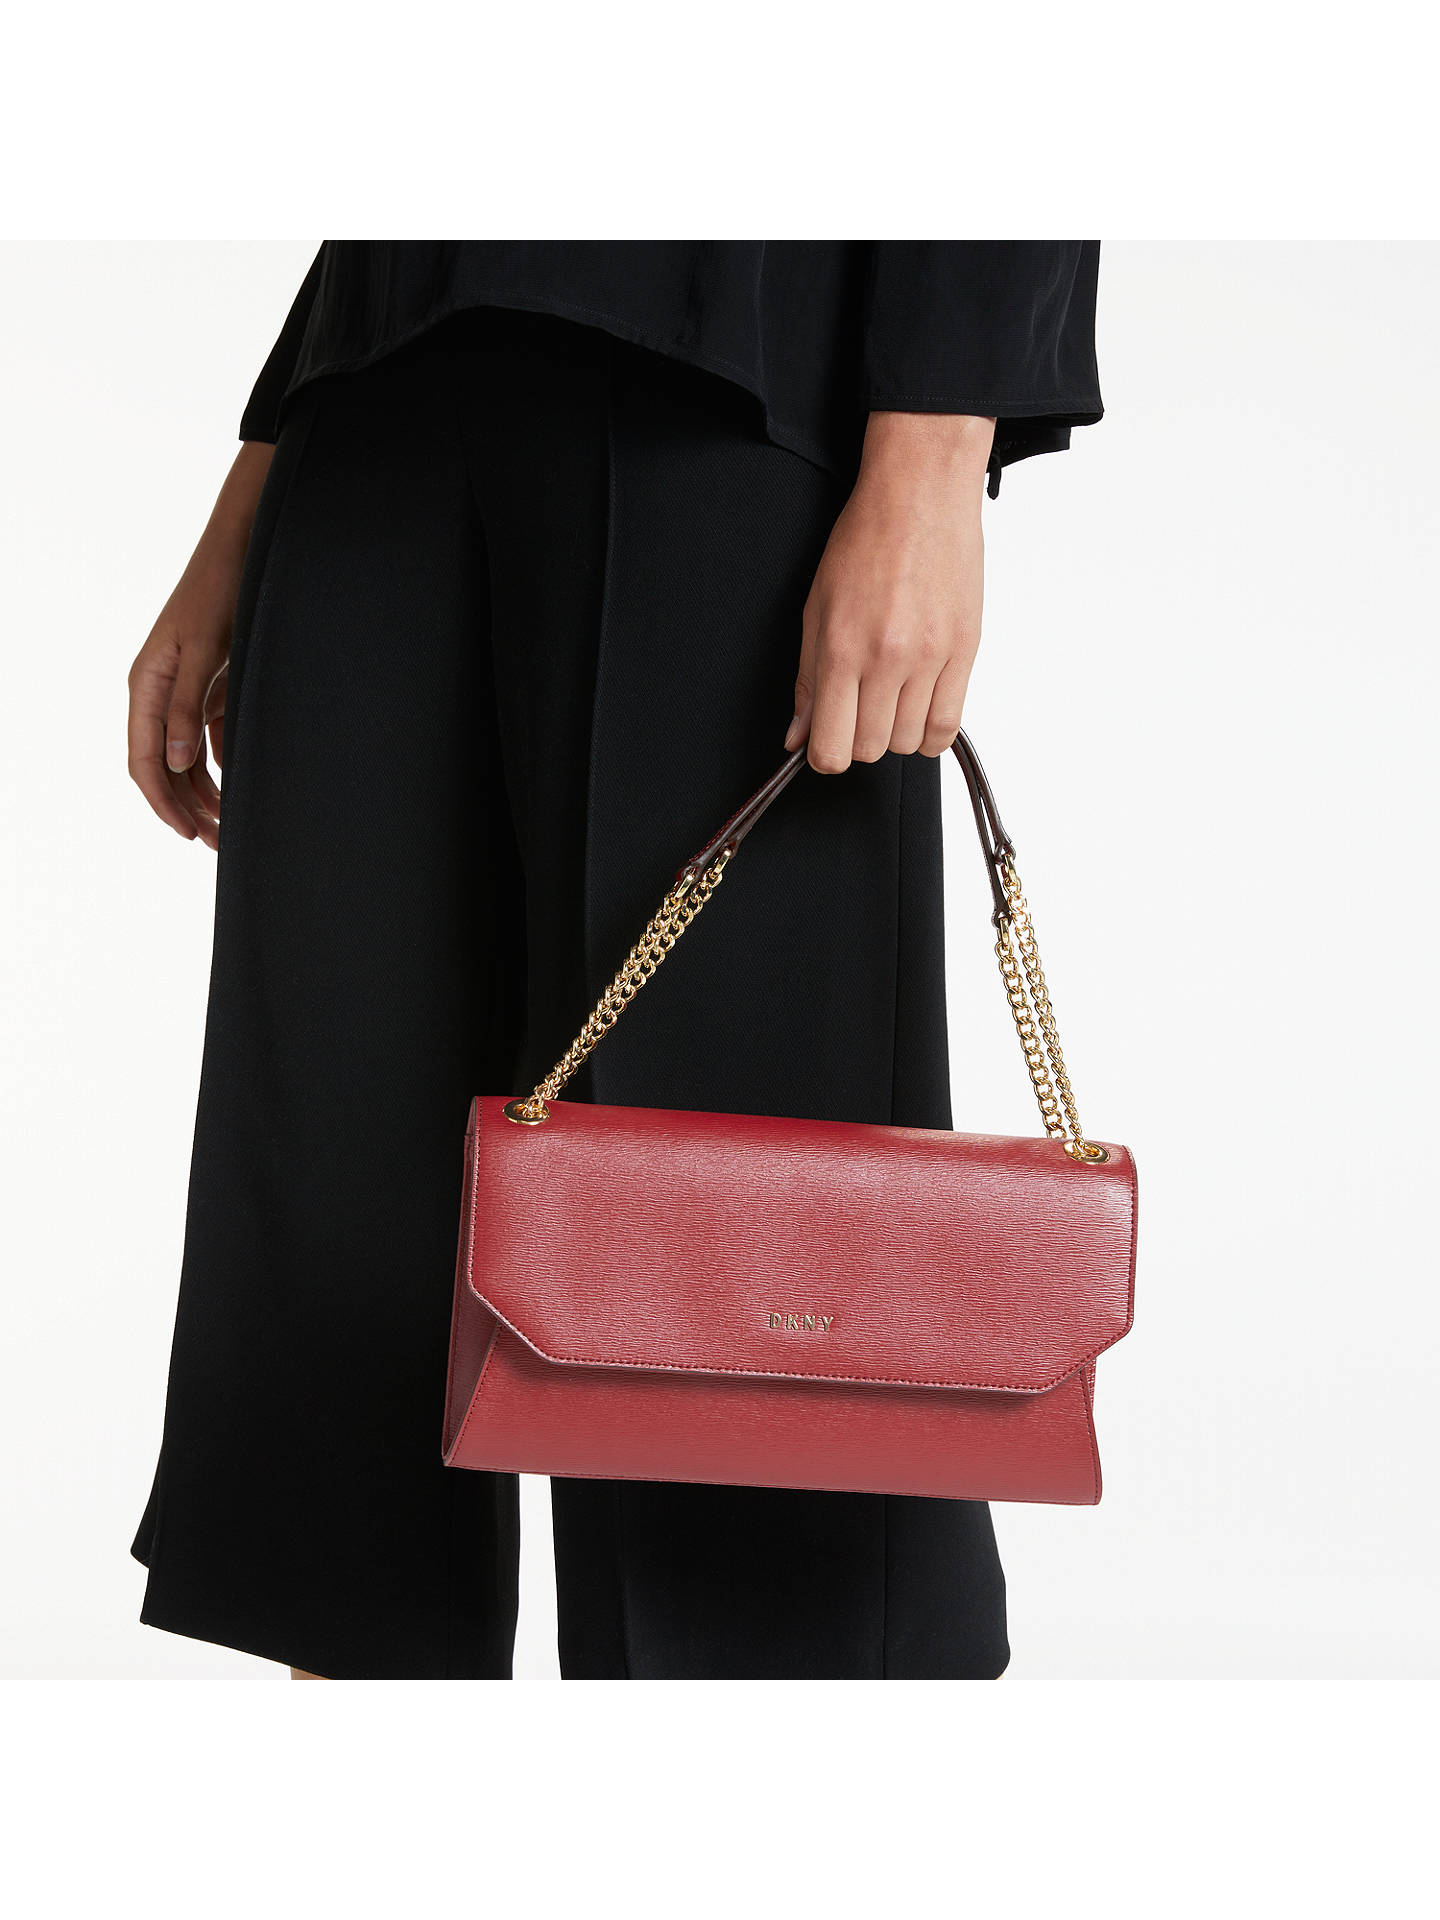 DKNY Sutton Leather Envelope Clutch Bag, Scarlet at John Lewis & Partners